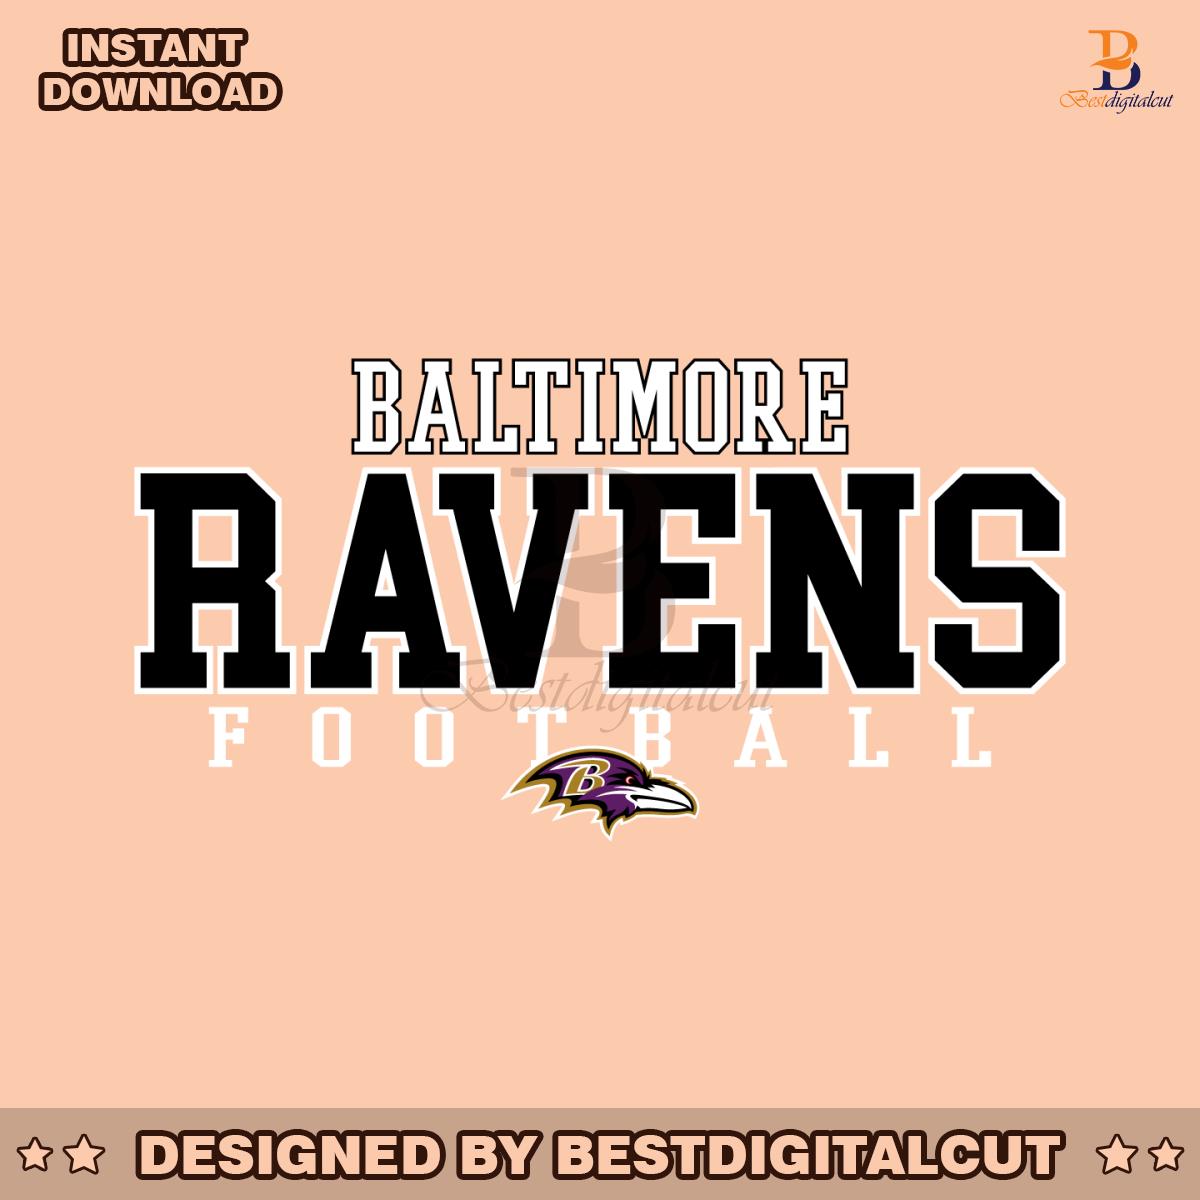 baltimore-ravens-football-svg-digital-download